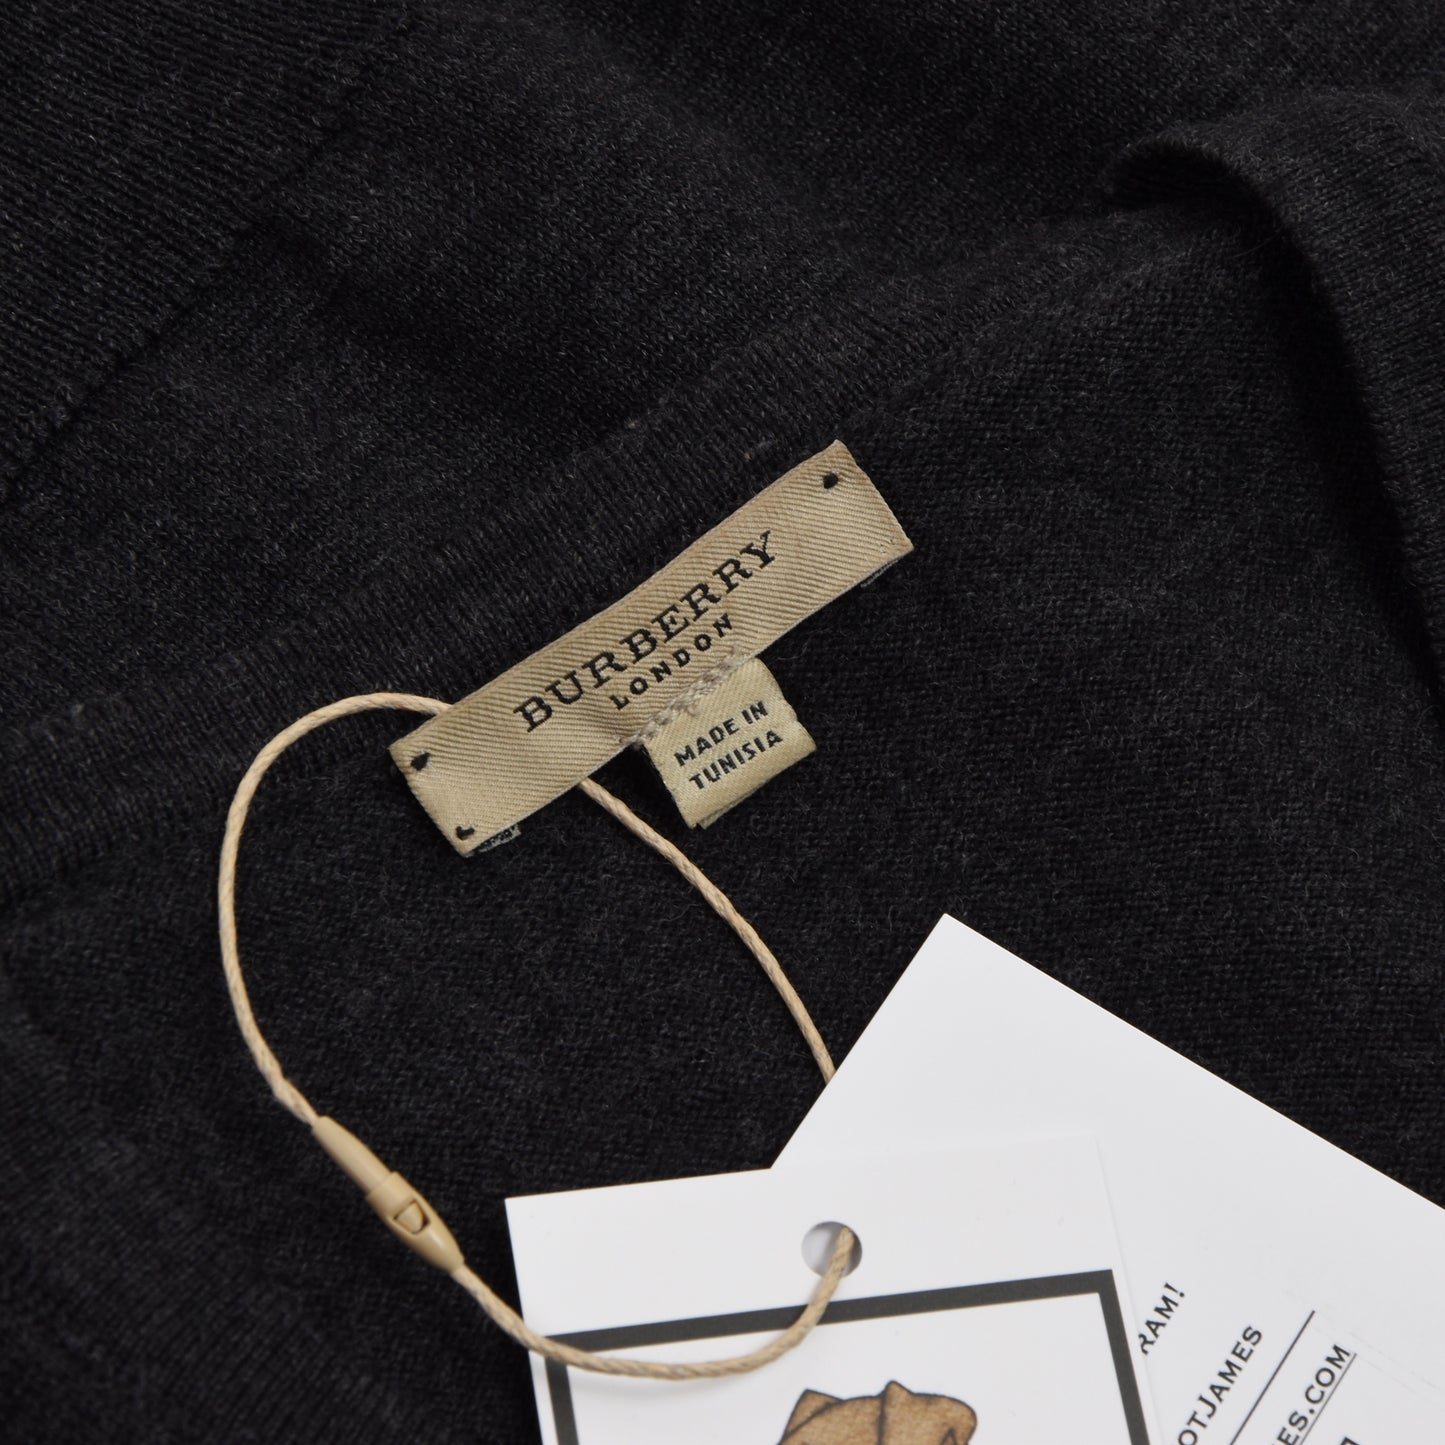 Burberry London Merino Wool Sweater Size M - Charcoal